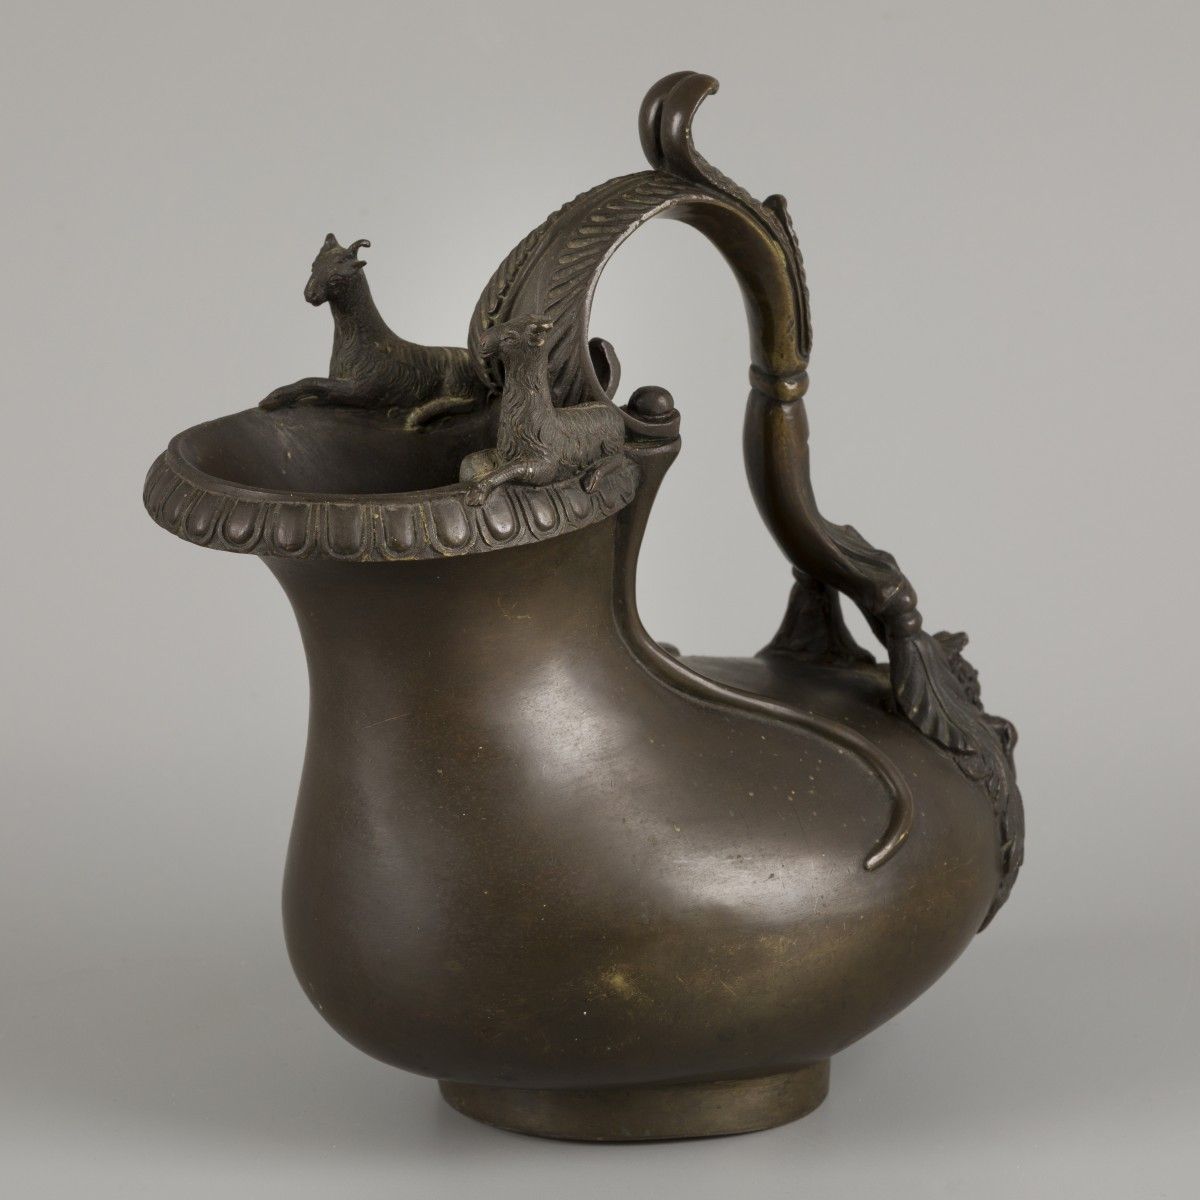 A Grand Tour souvenir bronze Askos jug, after earlier Roman example, Italy, ca. &hellip;